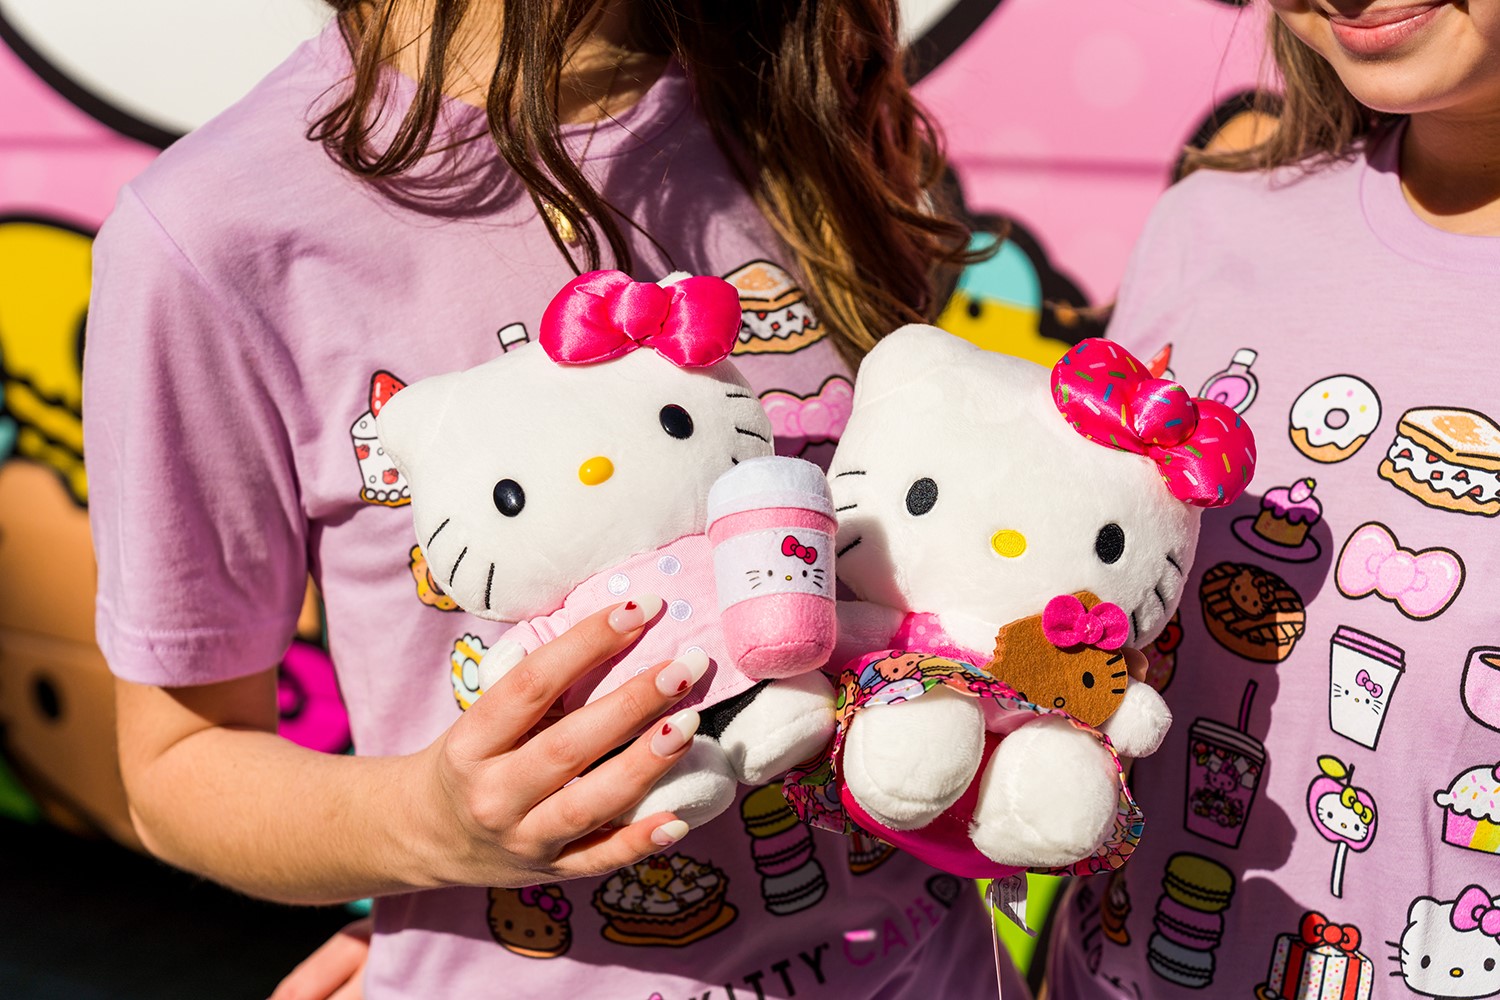 Hello Kitty Cafe truck will roll into San Antonio on July 11